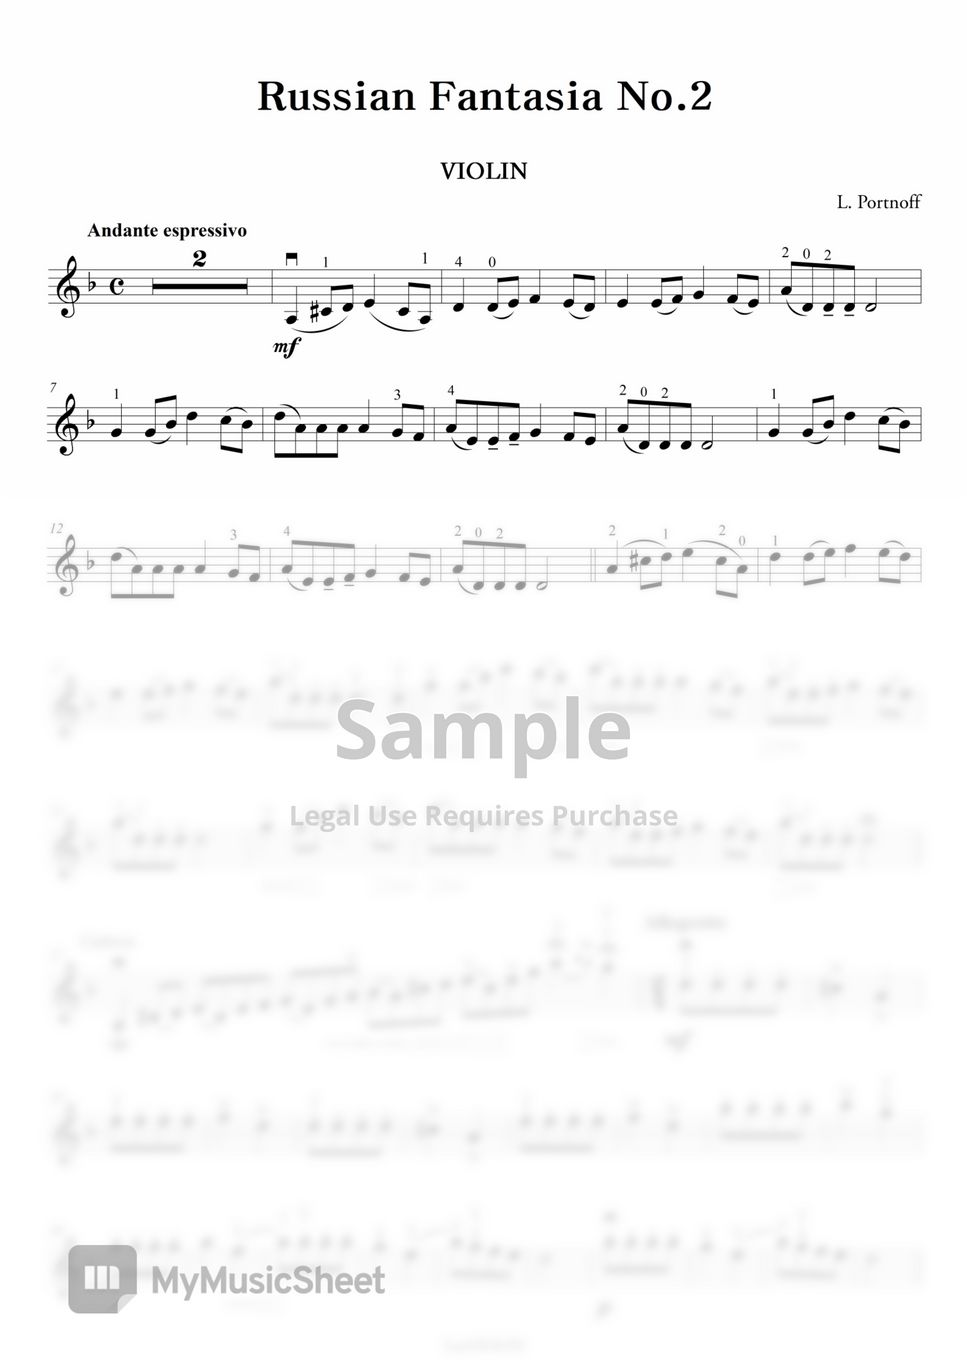 Portnoff - Russian Fantasia No.2 (Violin) (MR포함) by Lee